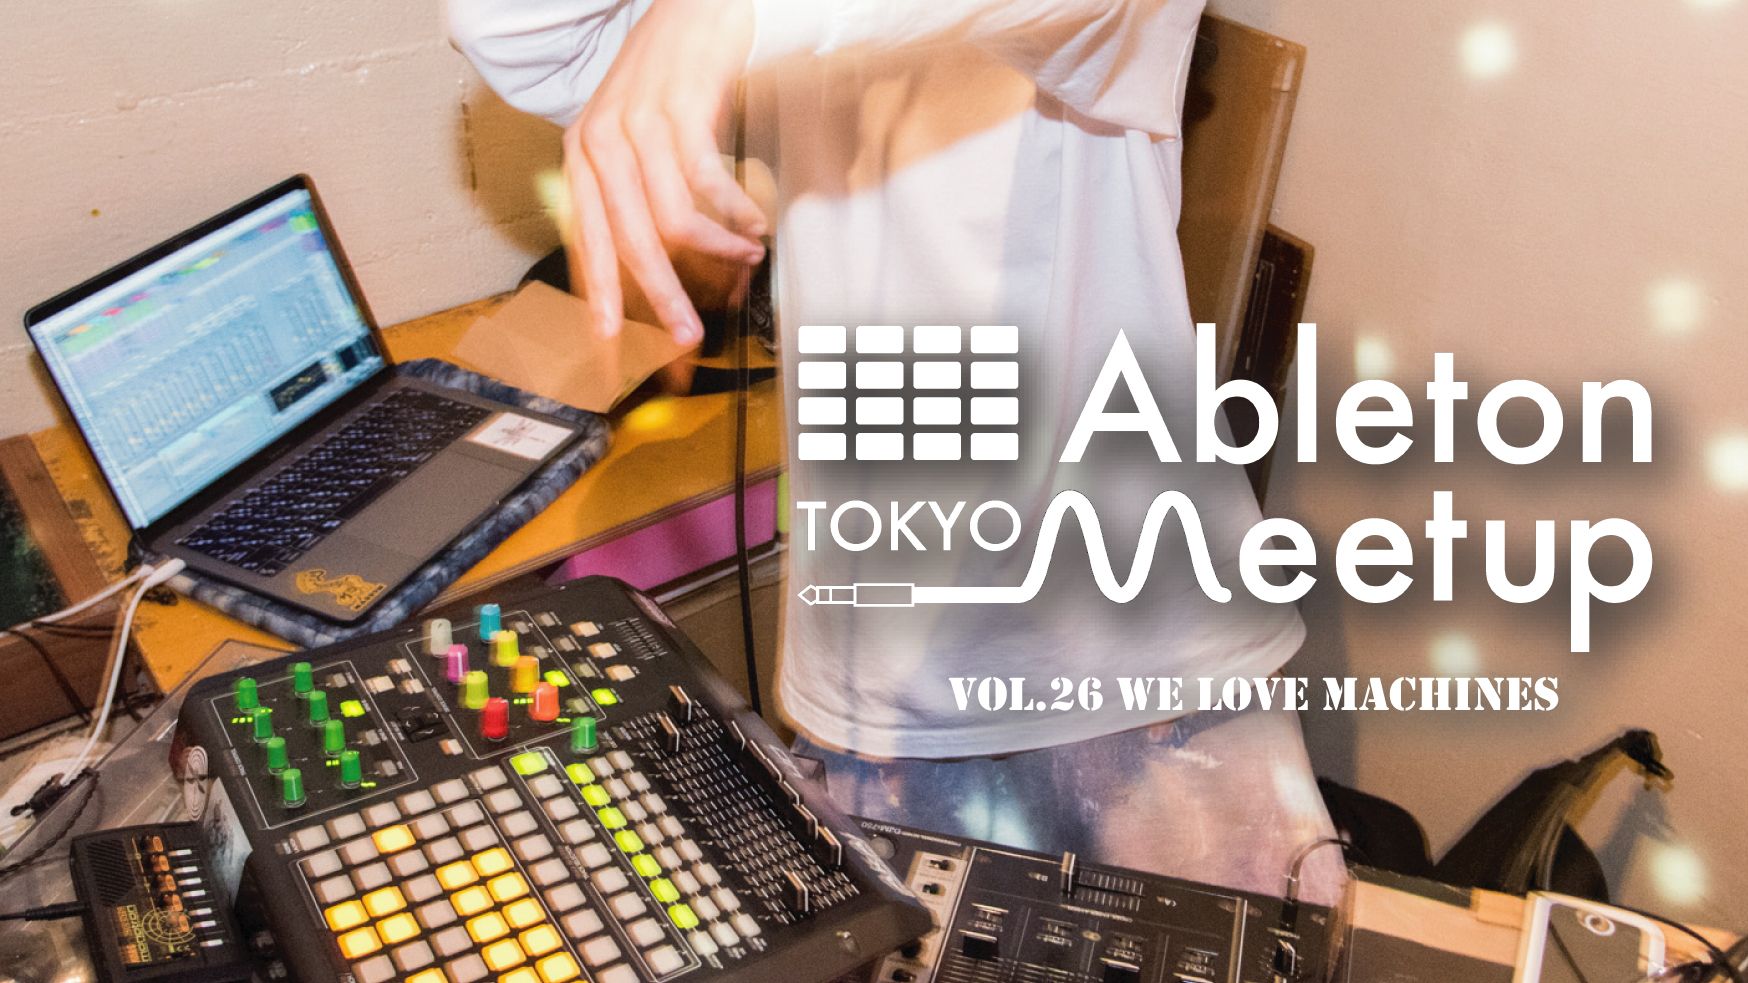 Ableton Meetup Tokyo Vol.26